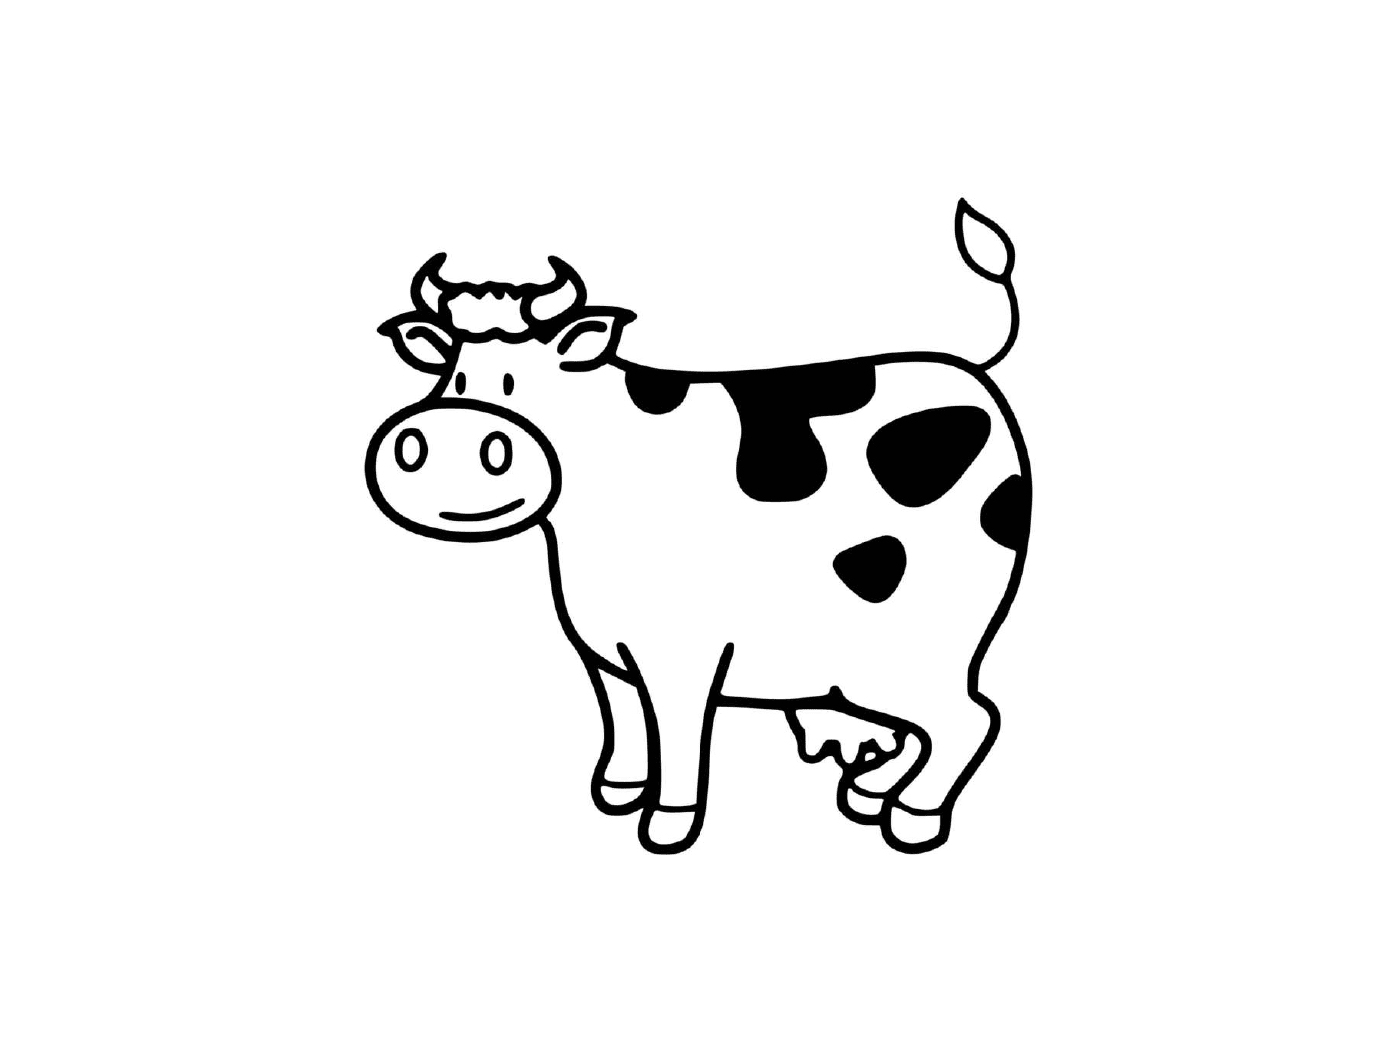   Animal de ferme, la vache 